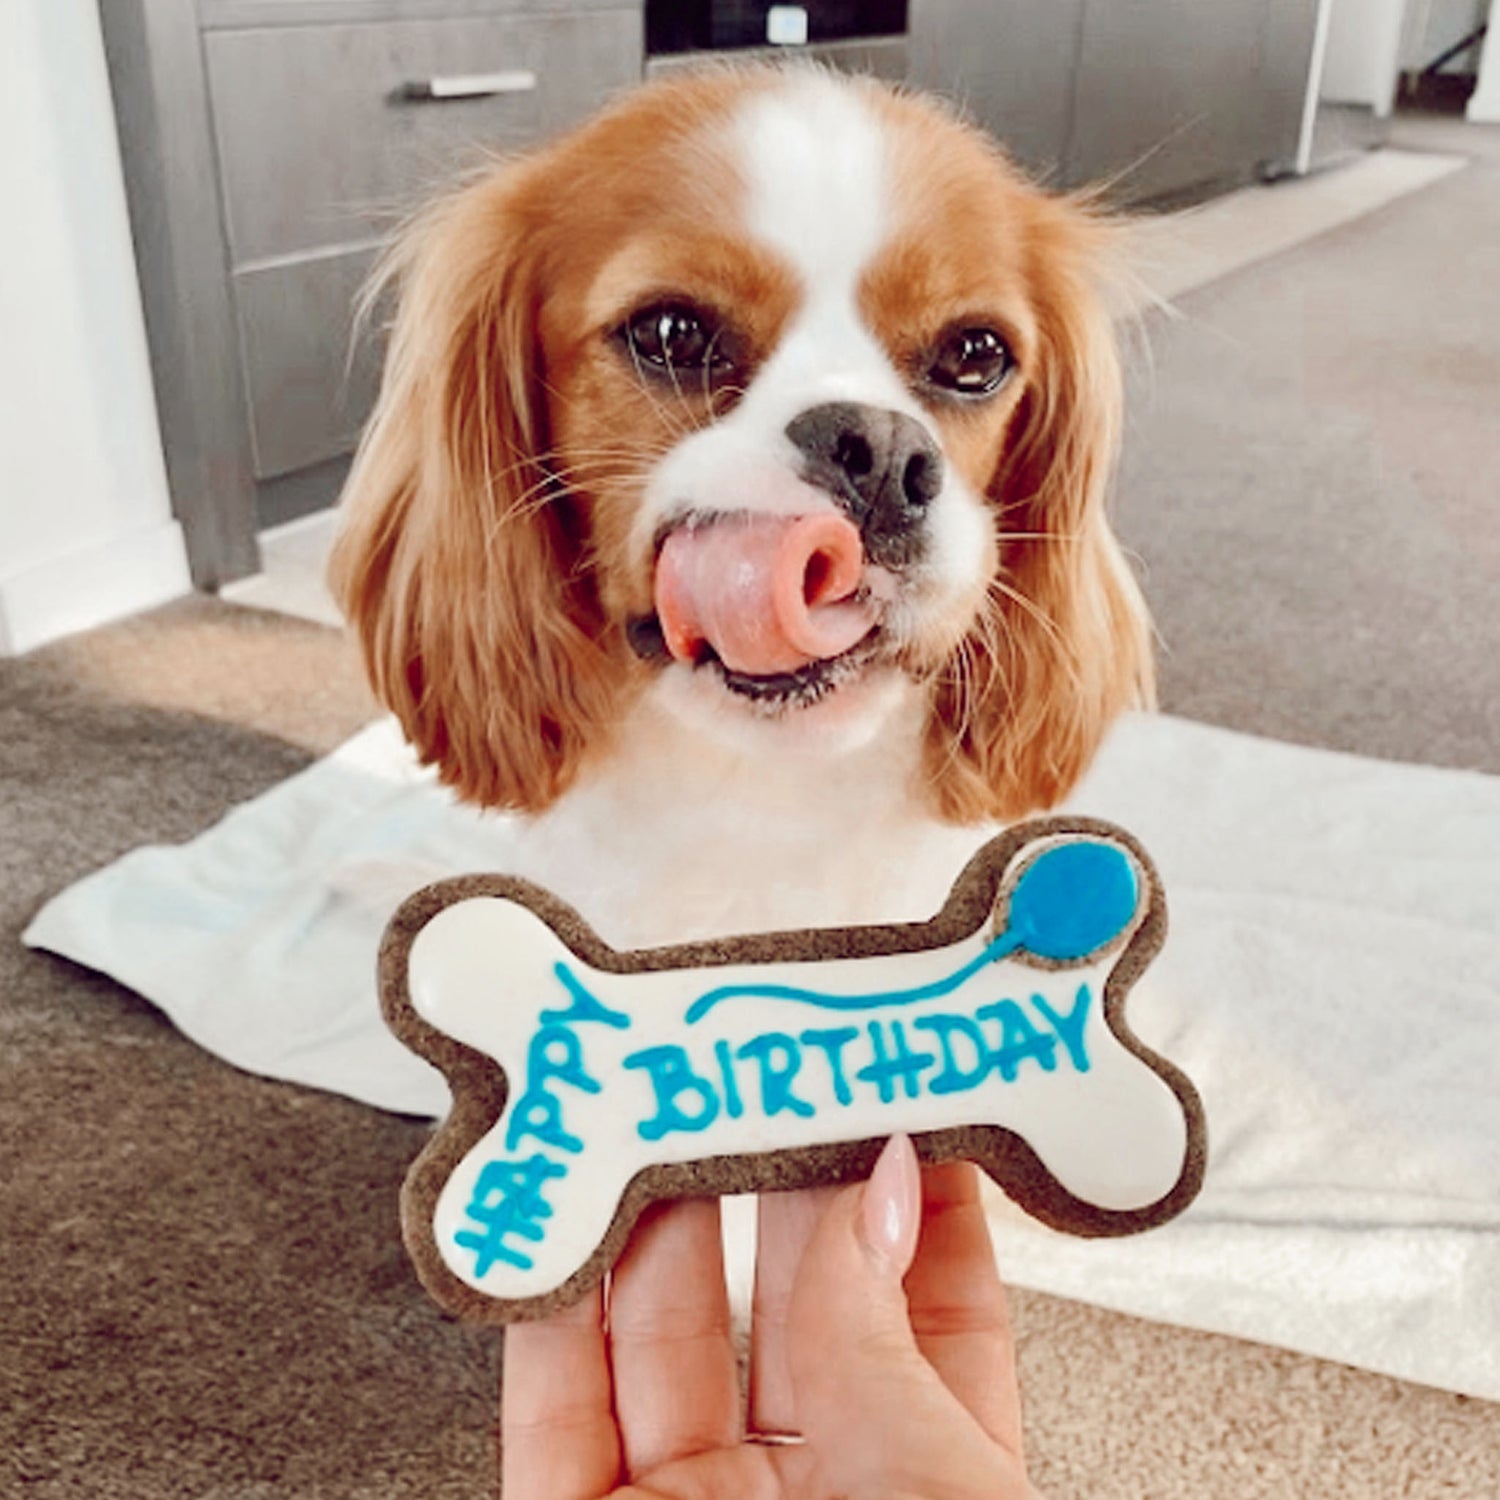 Dog-Biscuits-Happy-Birthday-Dog-Bone-White-Blue-Social-Lick